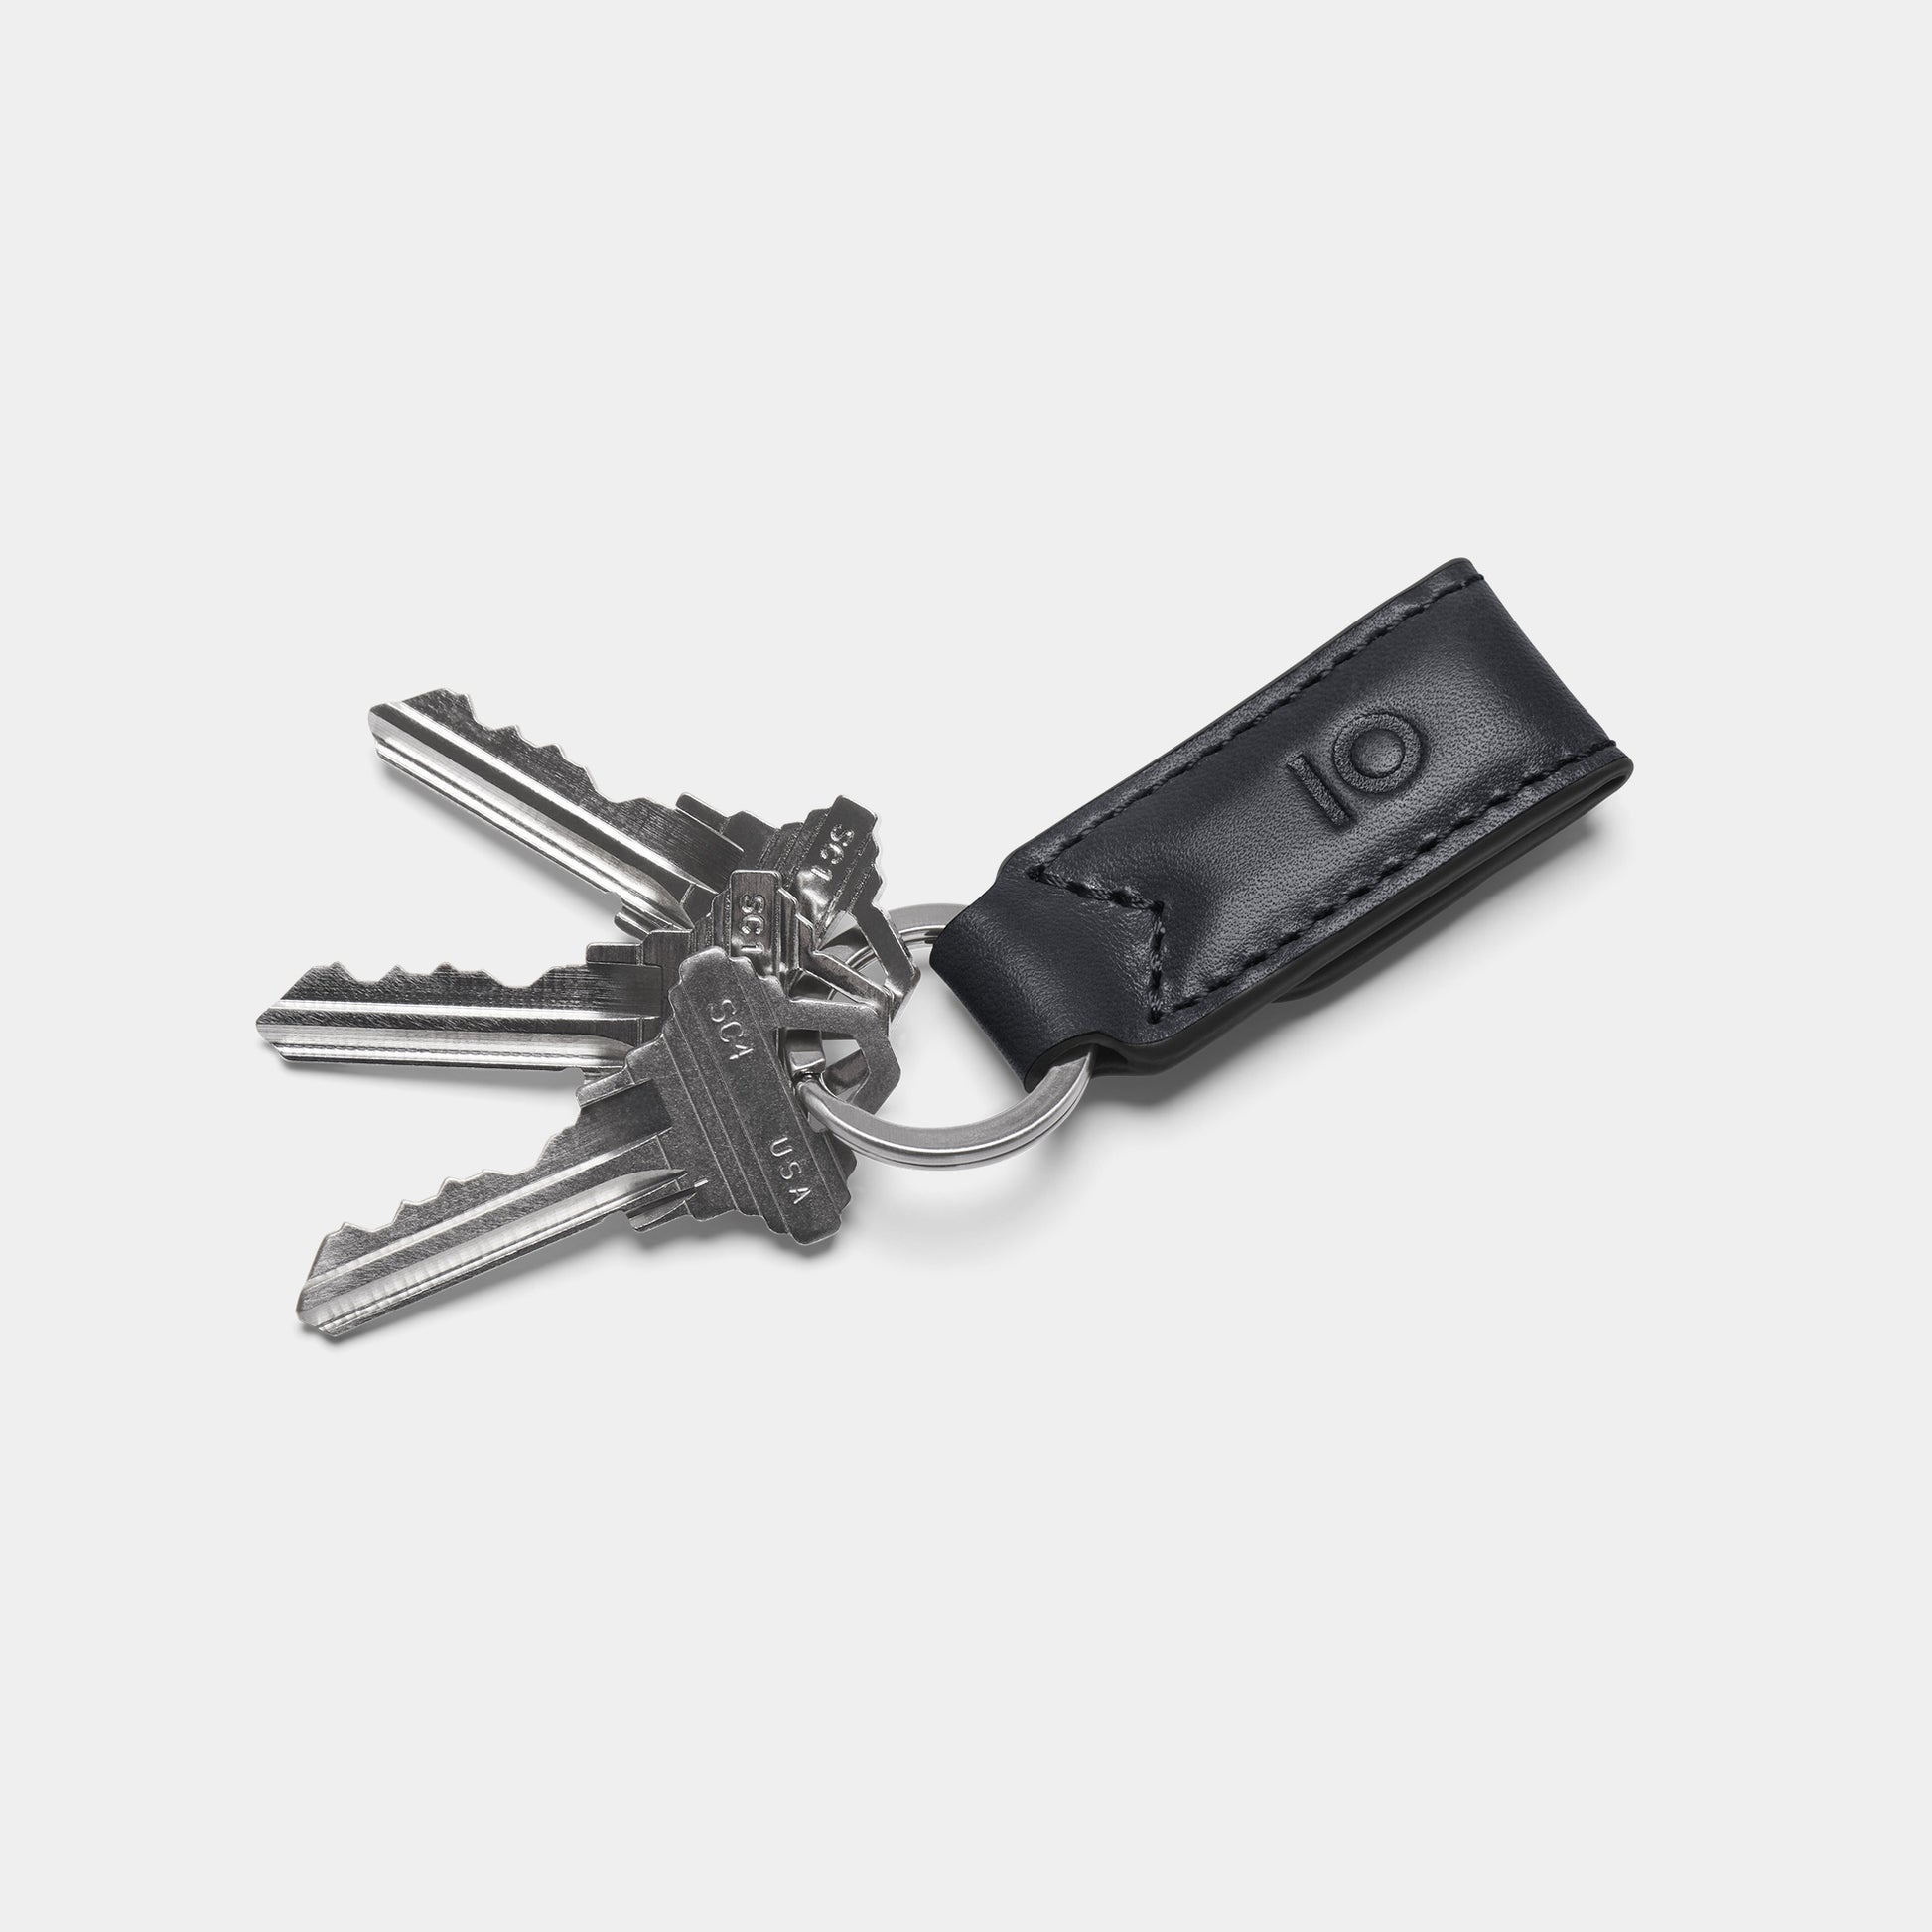 Gematay Microfiber Leather Car Keychain, Universal Car Key Fob Keychain Holder for Men and Wome, Black